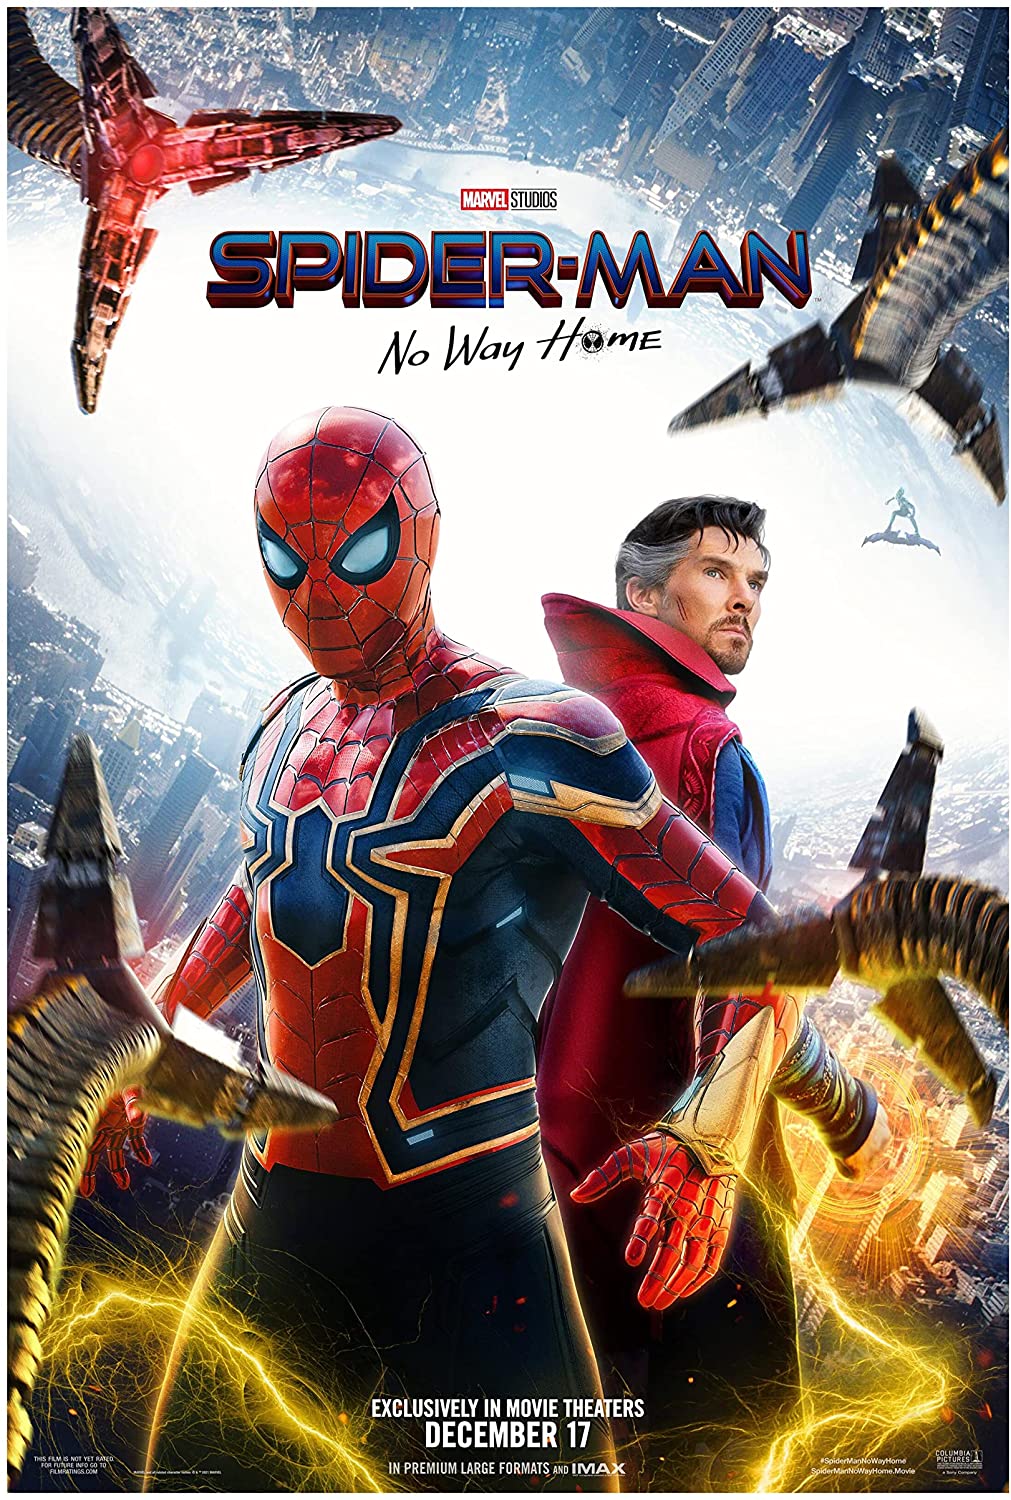 Spider Man No Way Home Movie Poster Glossy Print Photo Wall Art Stars Zendaya Benedict Cumberbatch Tom Holland Sizes 8x10 11x17 16x20 22x28 24x36 27x40 (24x36 Inches): Posters & Prints